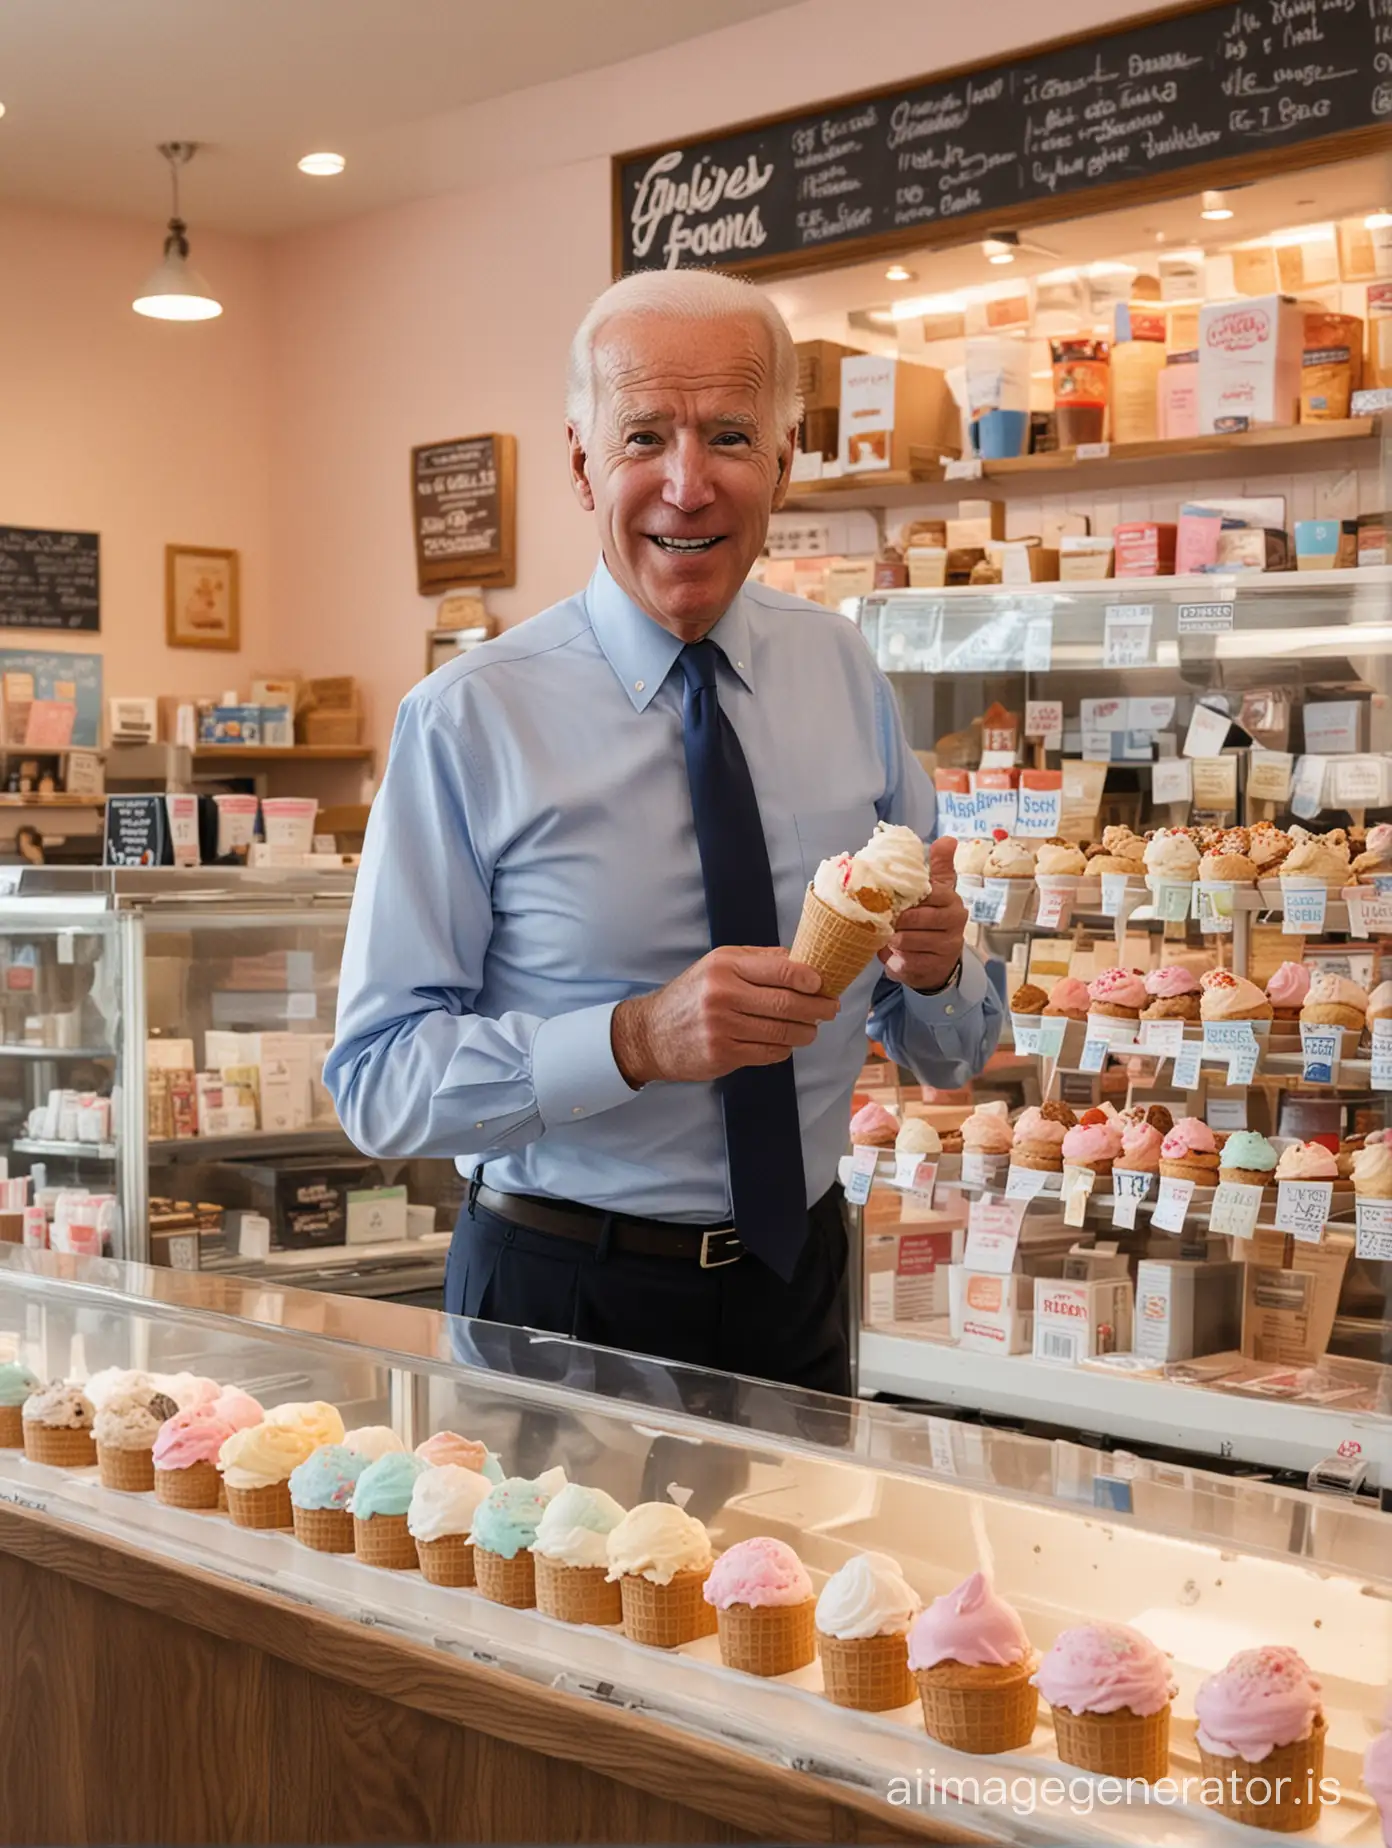 Joe Biden stand in Icecream Store and selling Icecream